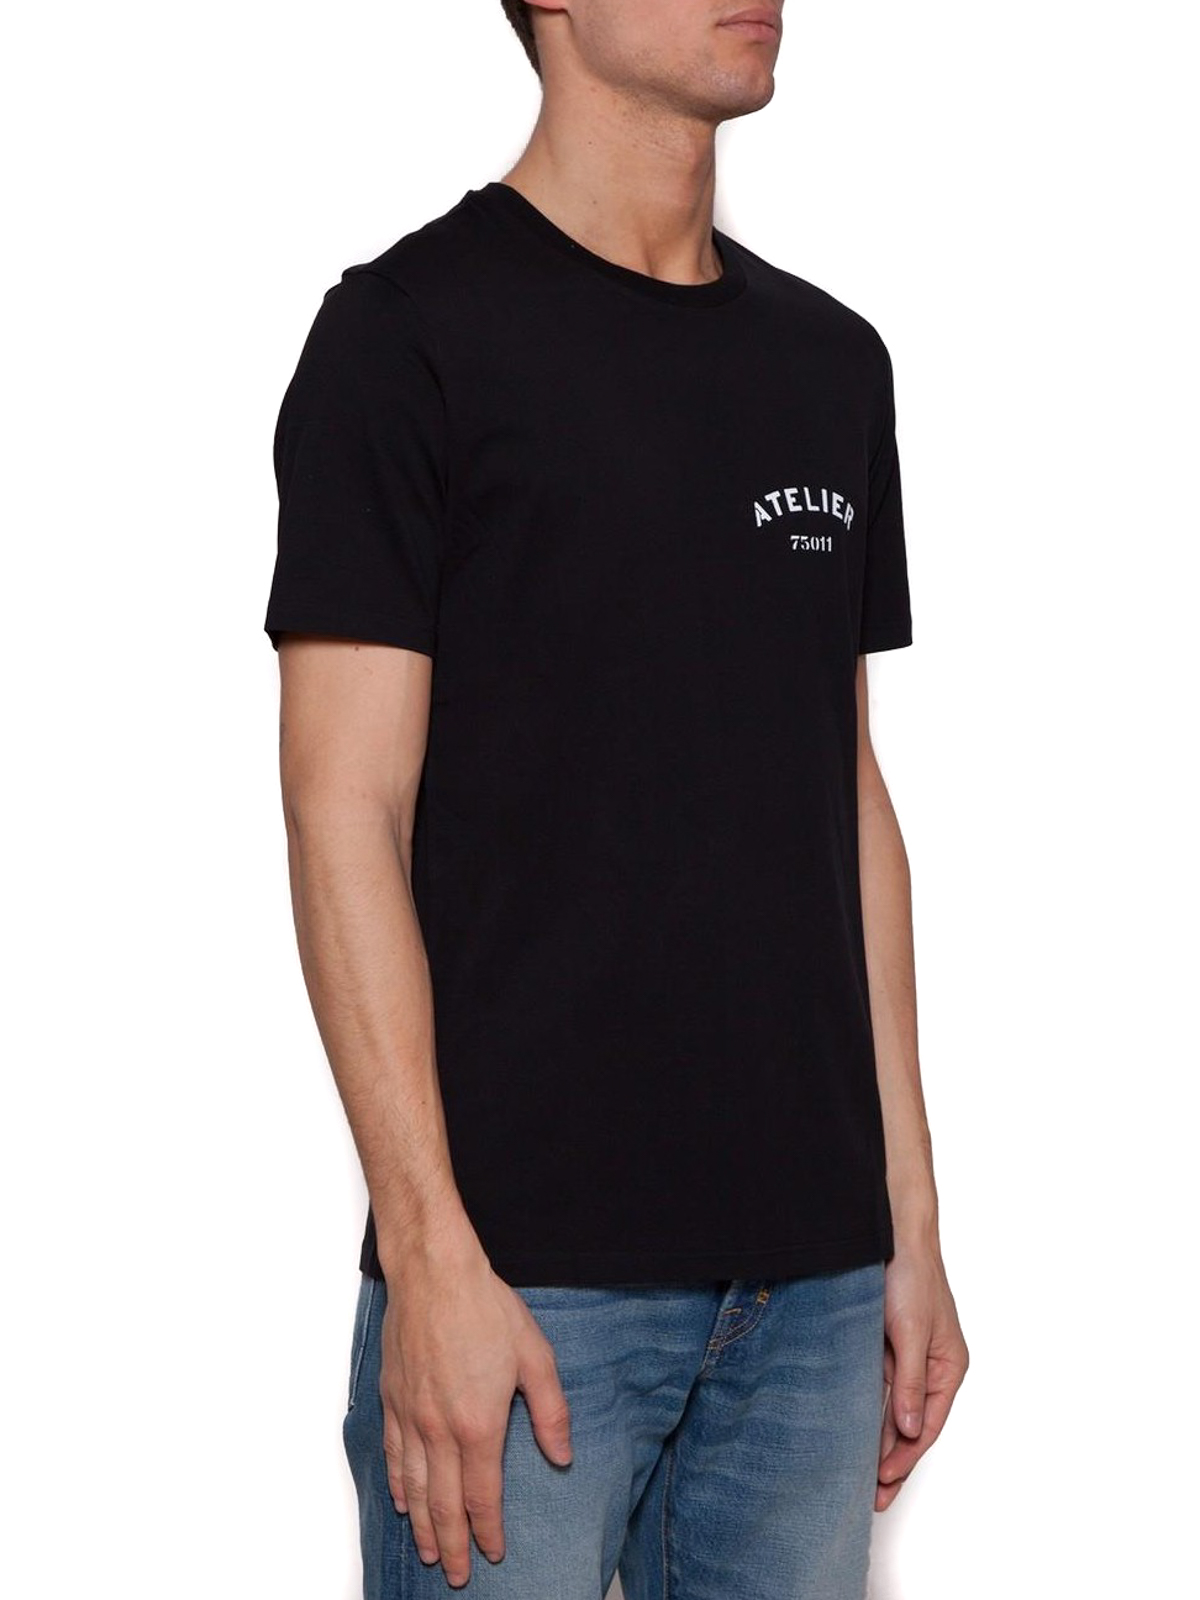 Tシャツ Maison Margiela - Tシャツ - 黒 - S30GC0639S22816900